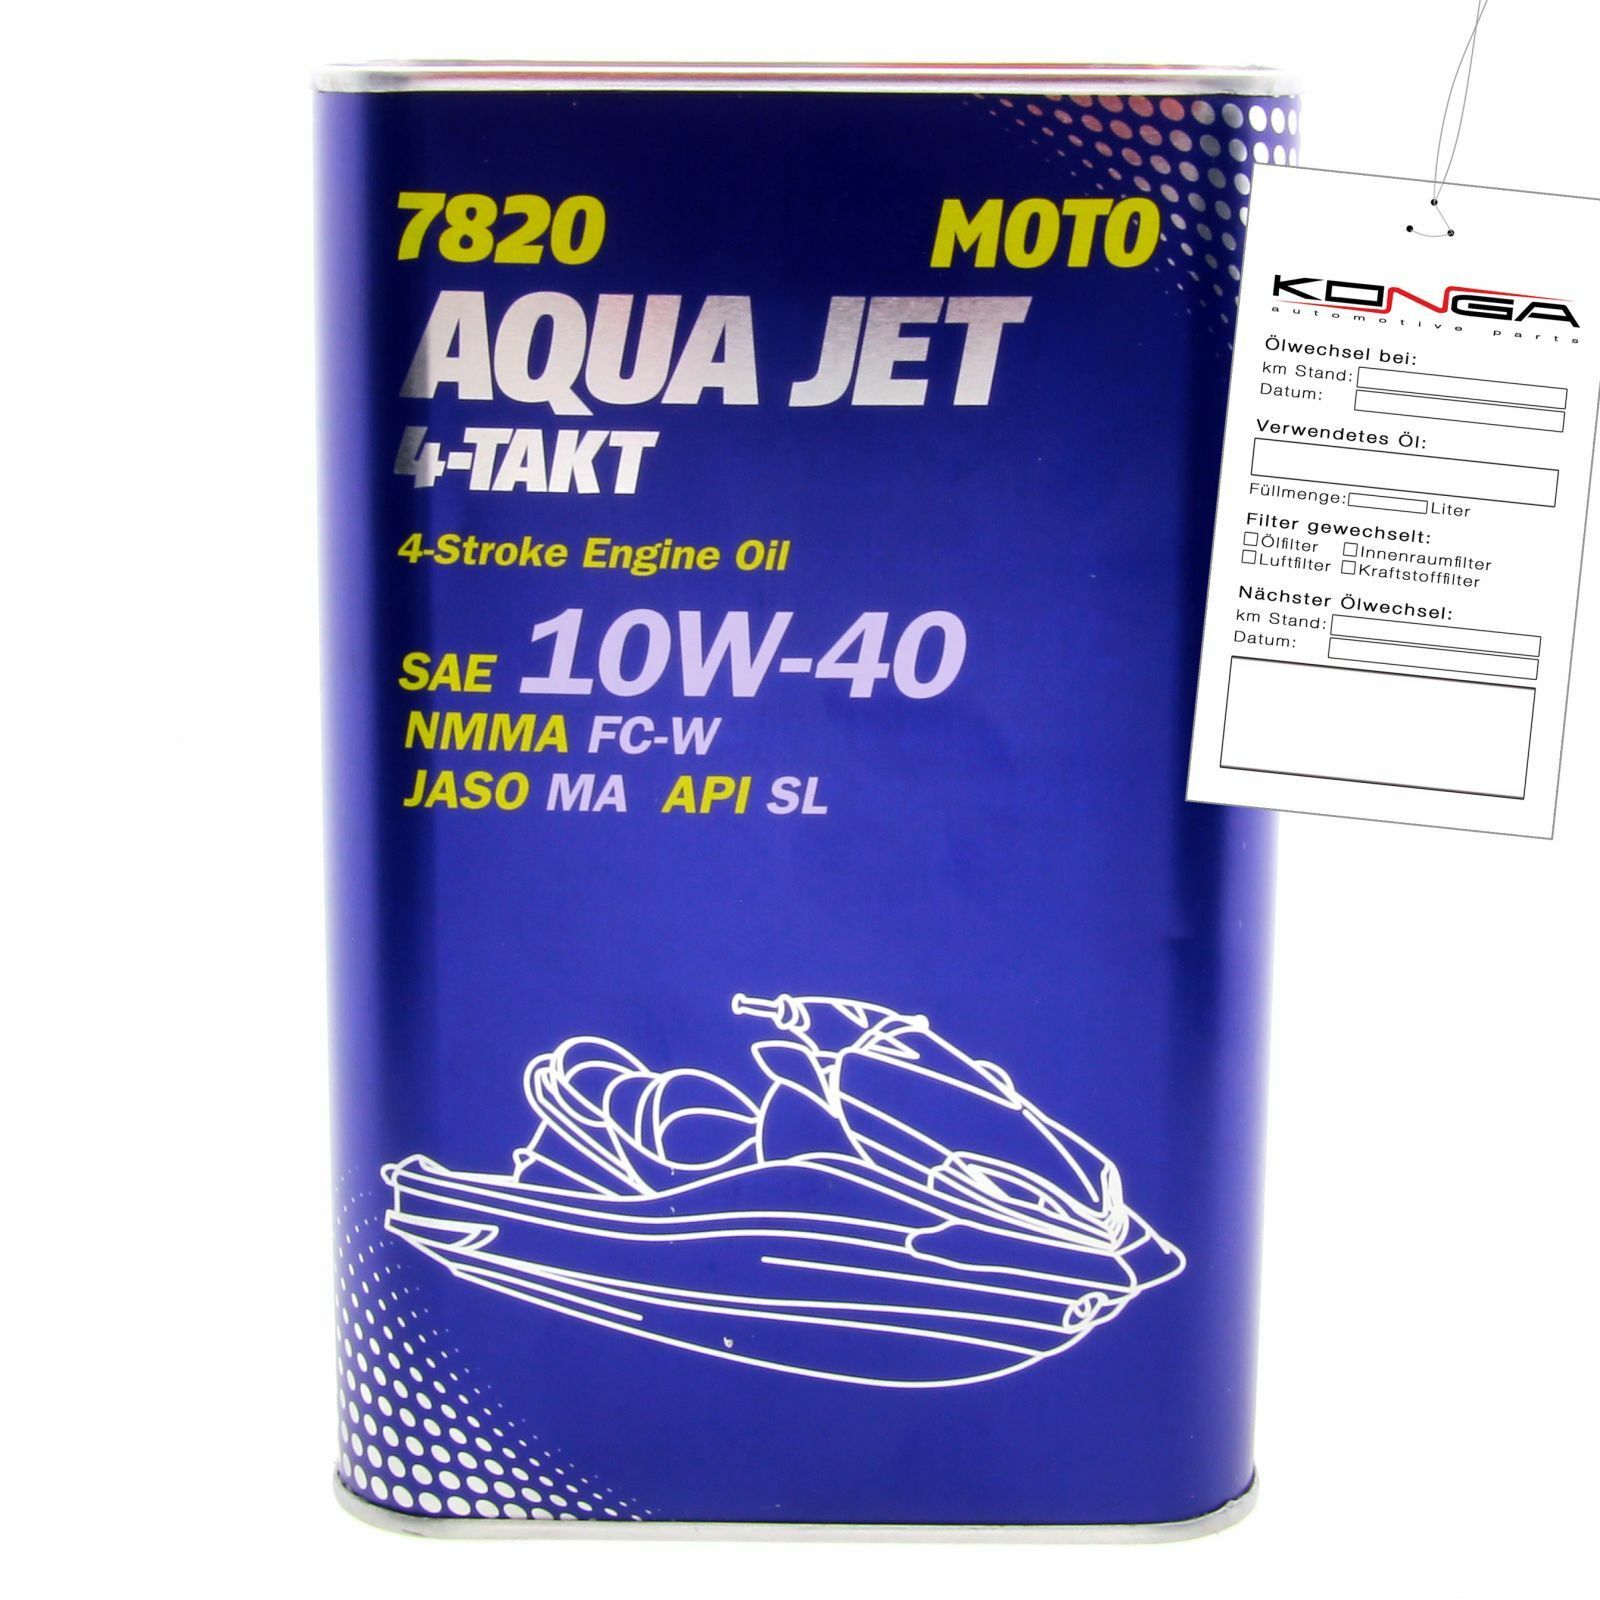 1 Liter MANNOL 7820 Aqua Jet 4-Takt 10W-40 API SL Motoröl 10W40